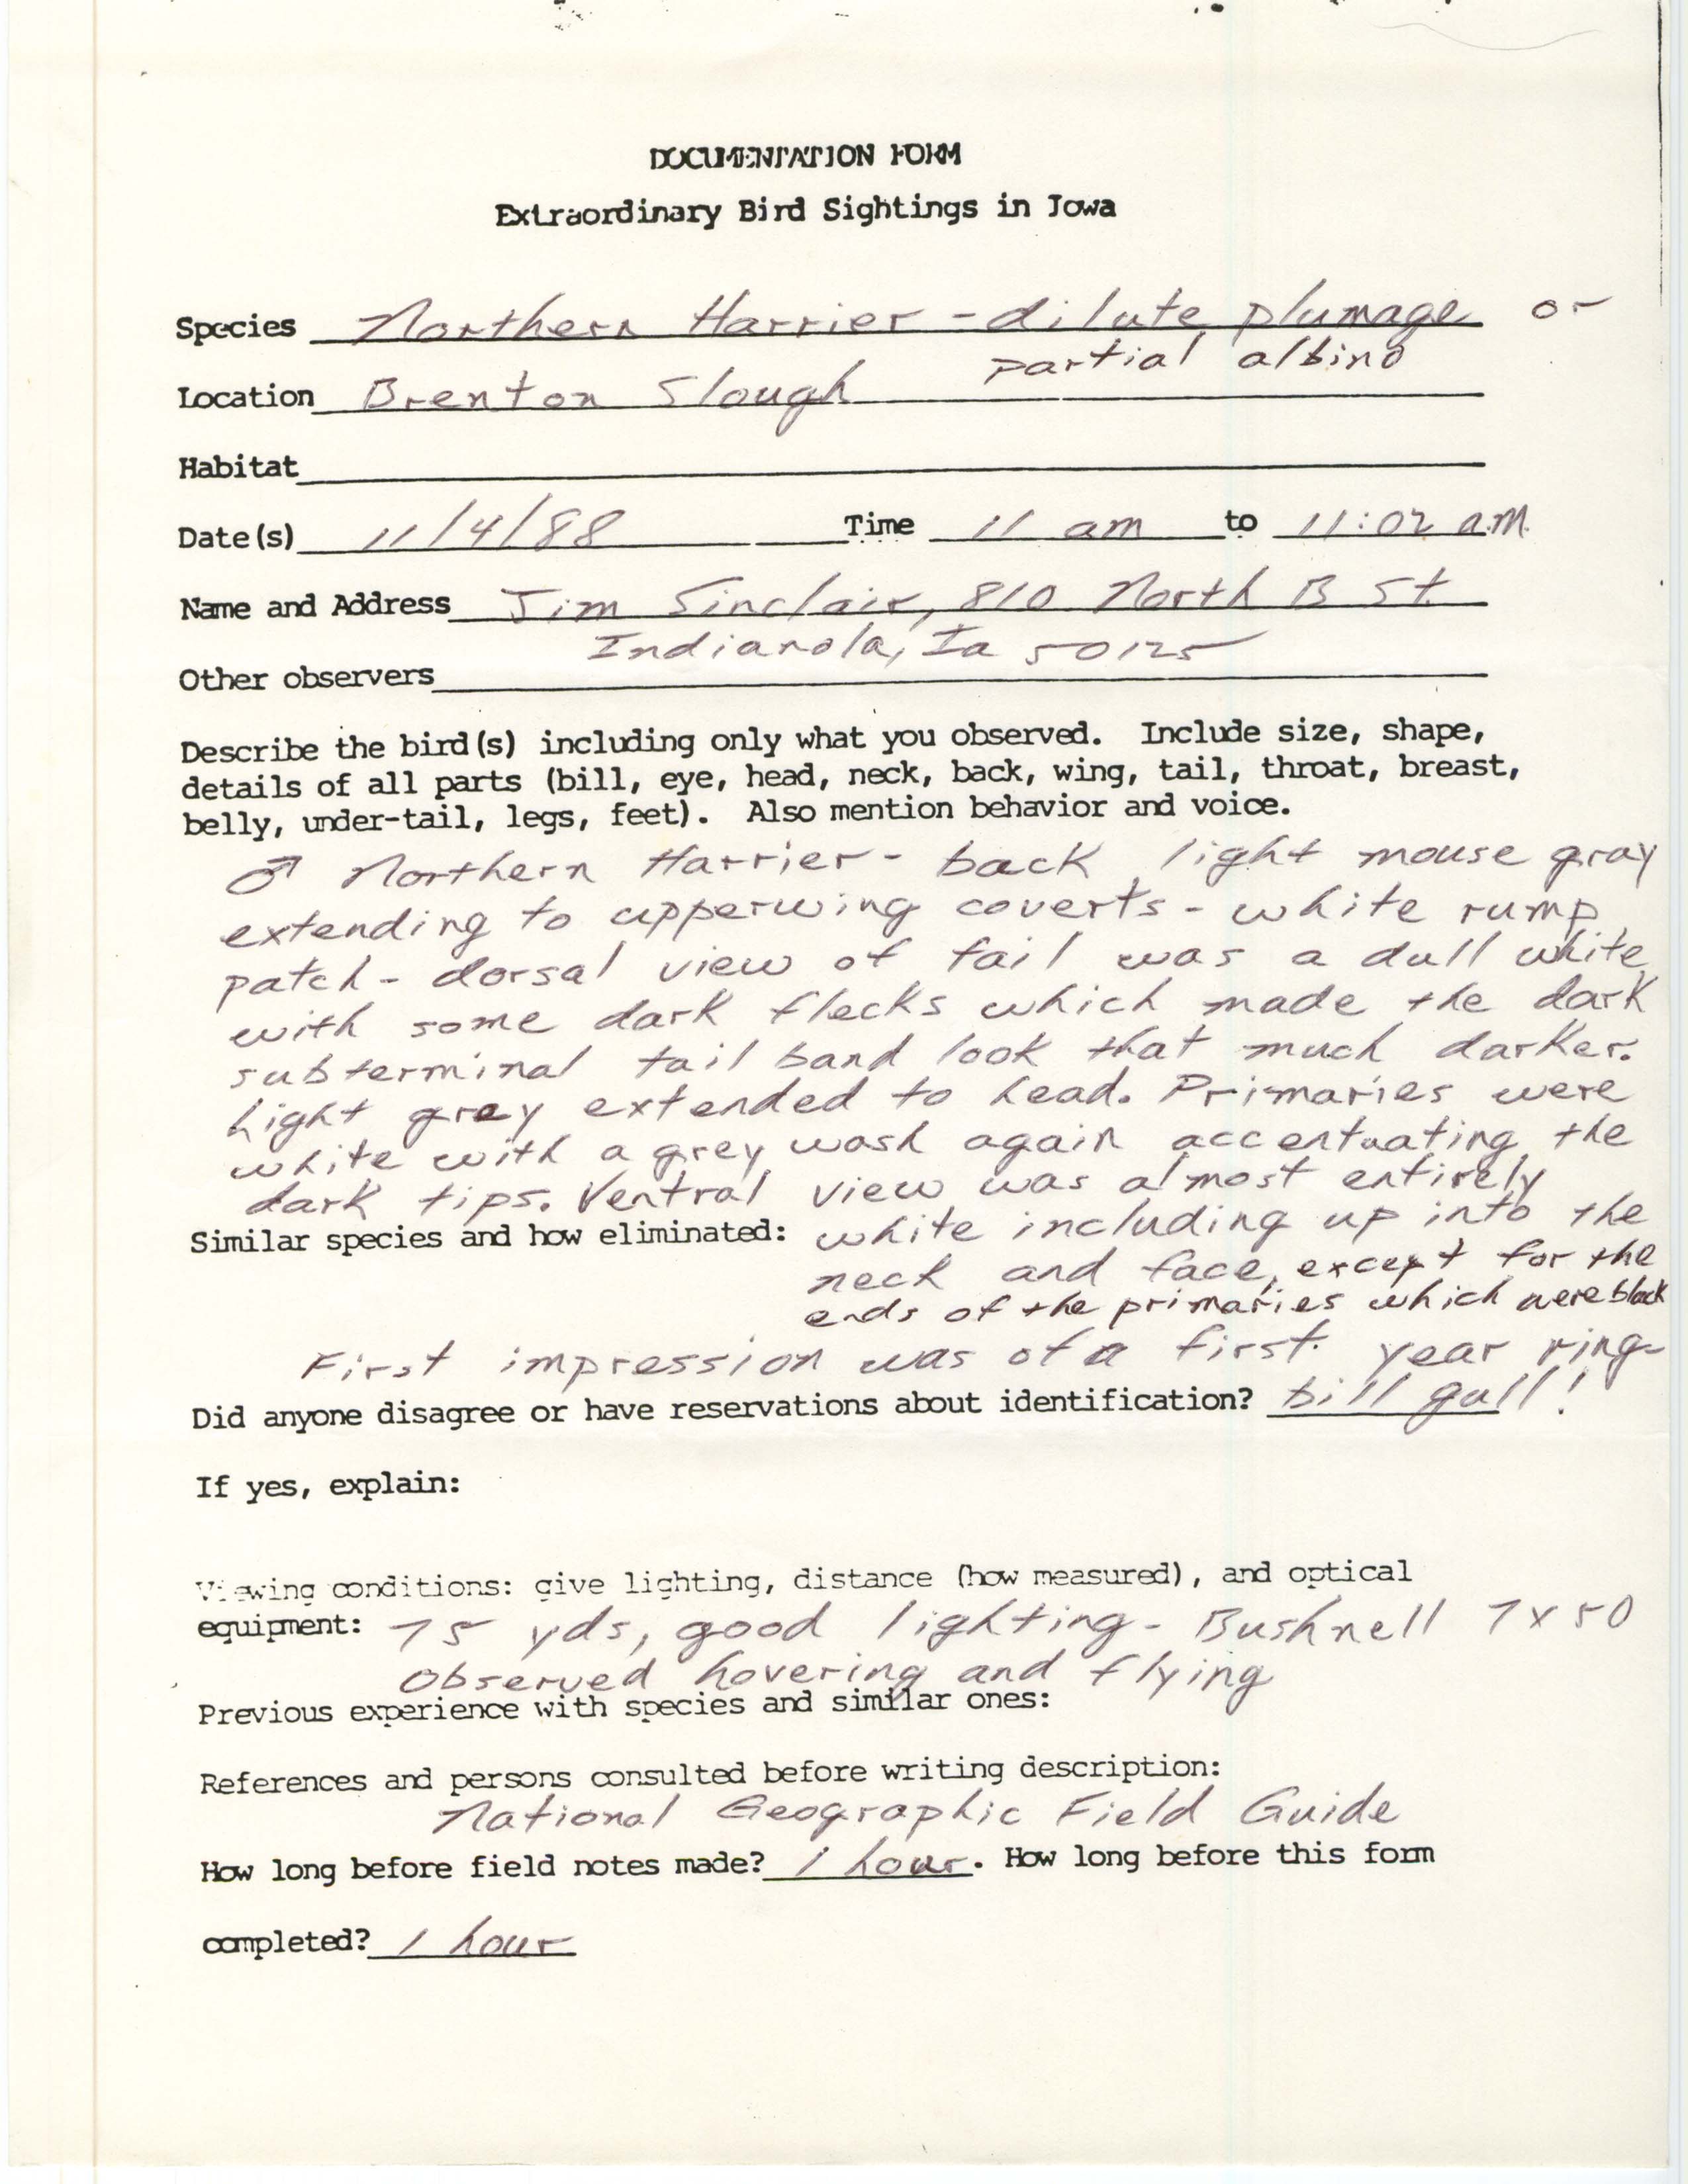 Rare bird documentation form for Northern Harrier at Brenton Slough, 1988